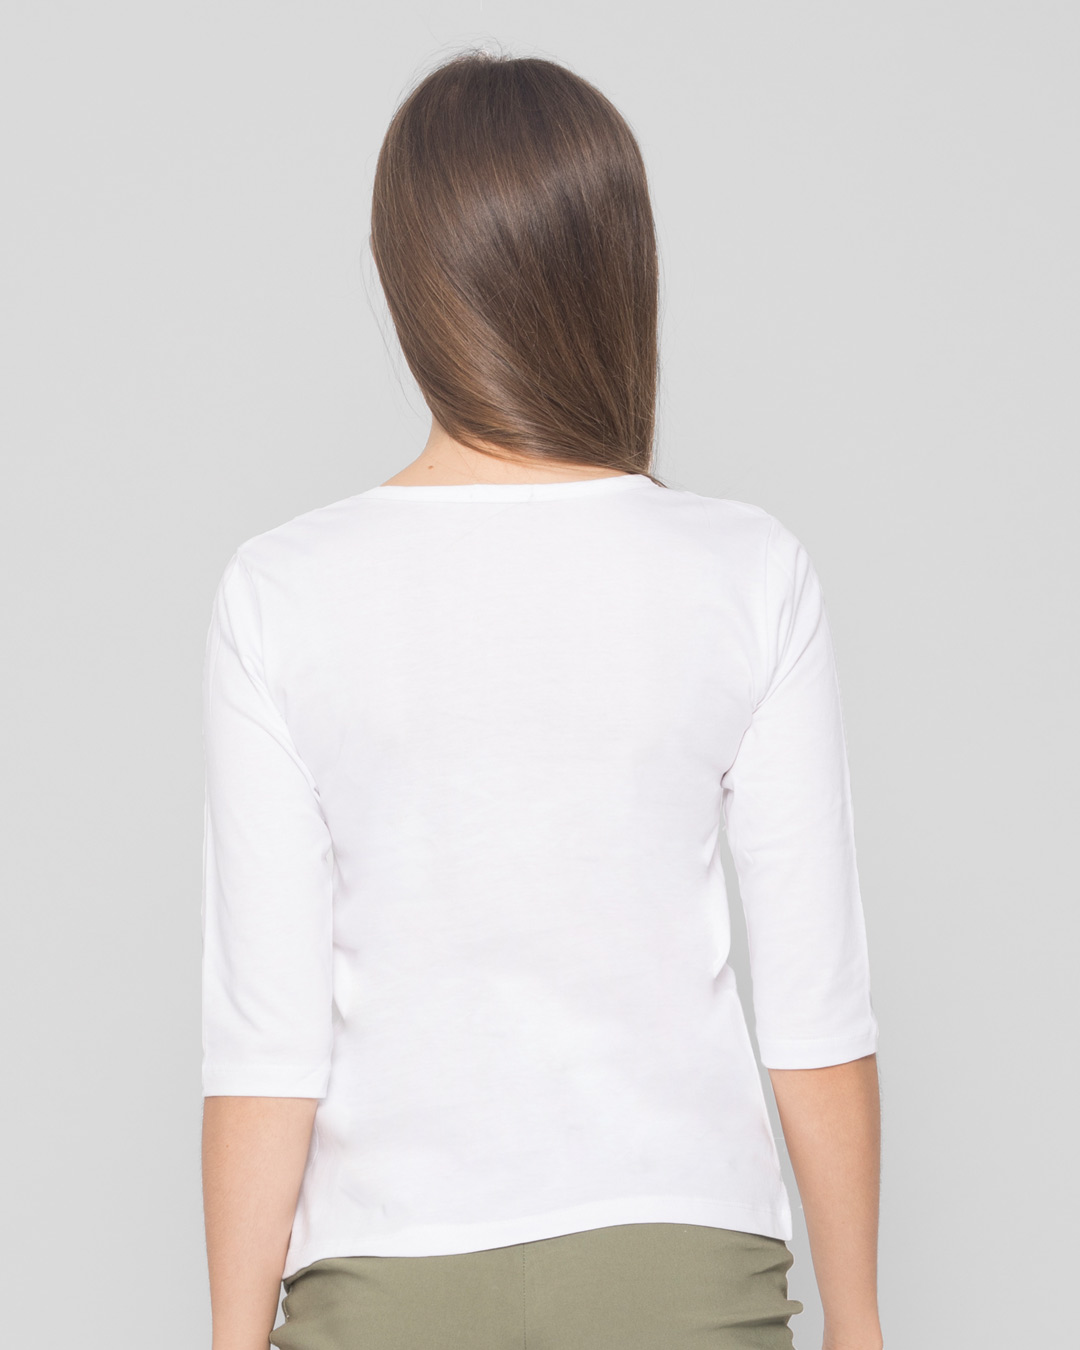 Shop Inspire Leaf Round Neck 3/4 Sleeve T-Shirt White-Back